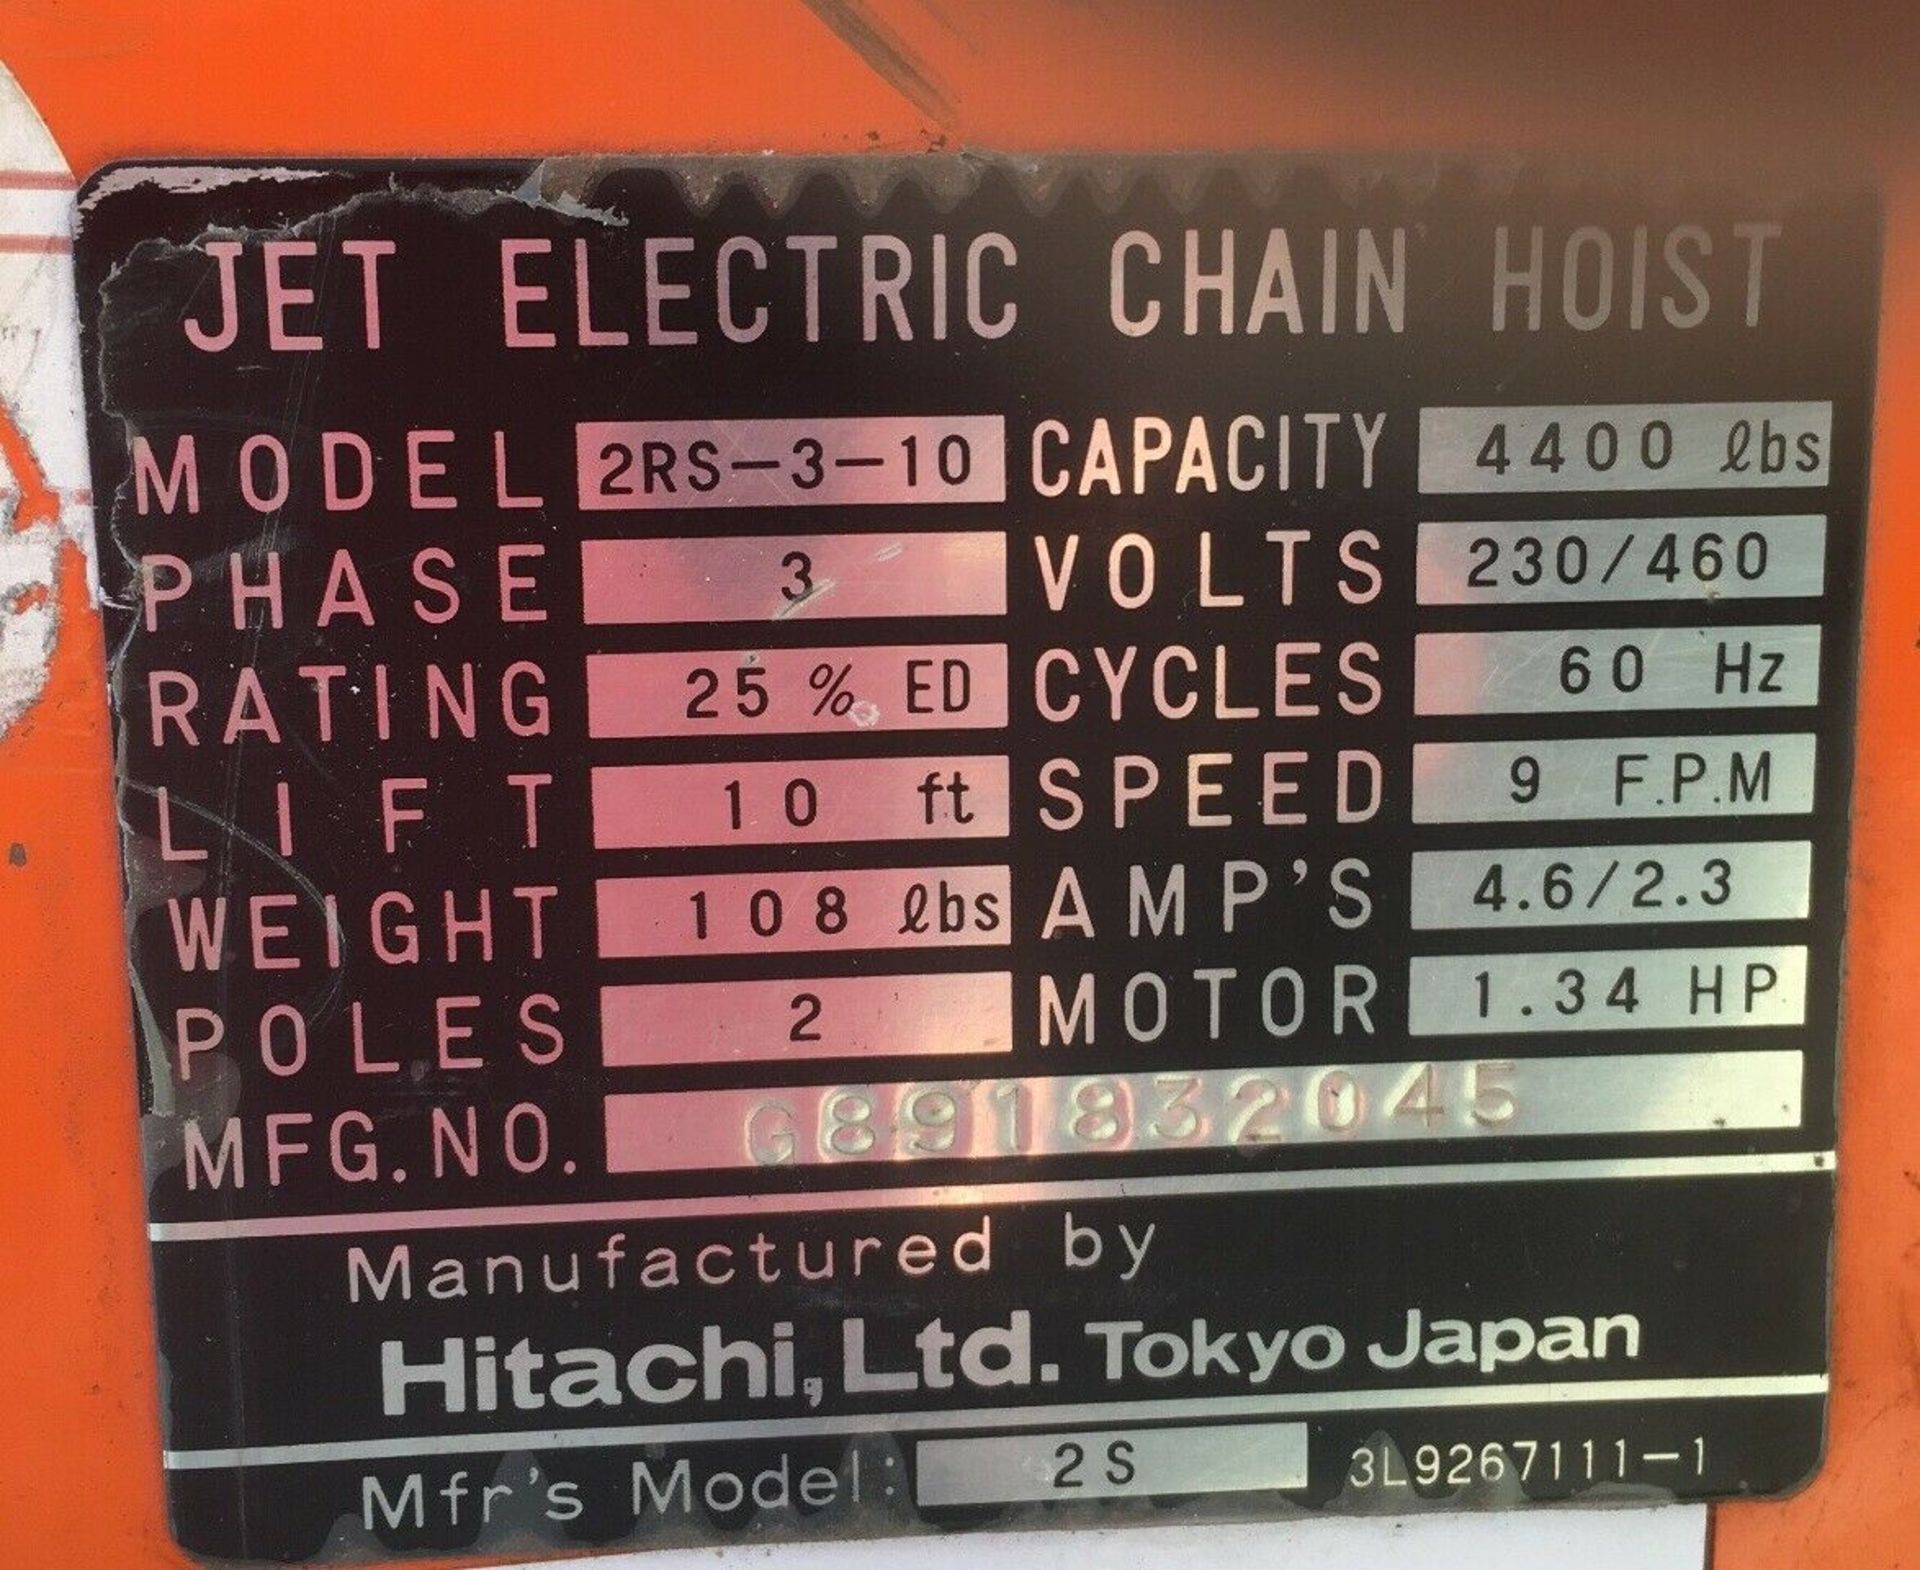 Jet Electric Chain Hoist 2 Ton 2RS-3-10/10 ft lift W/ 2 Ton CM Railstar Power Trolley - Image 2 of 6